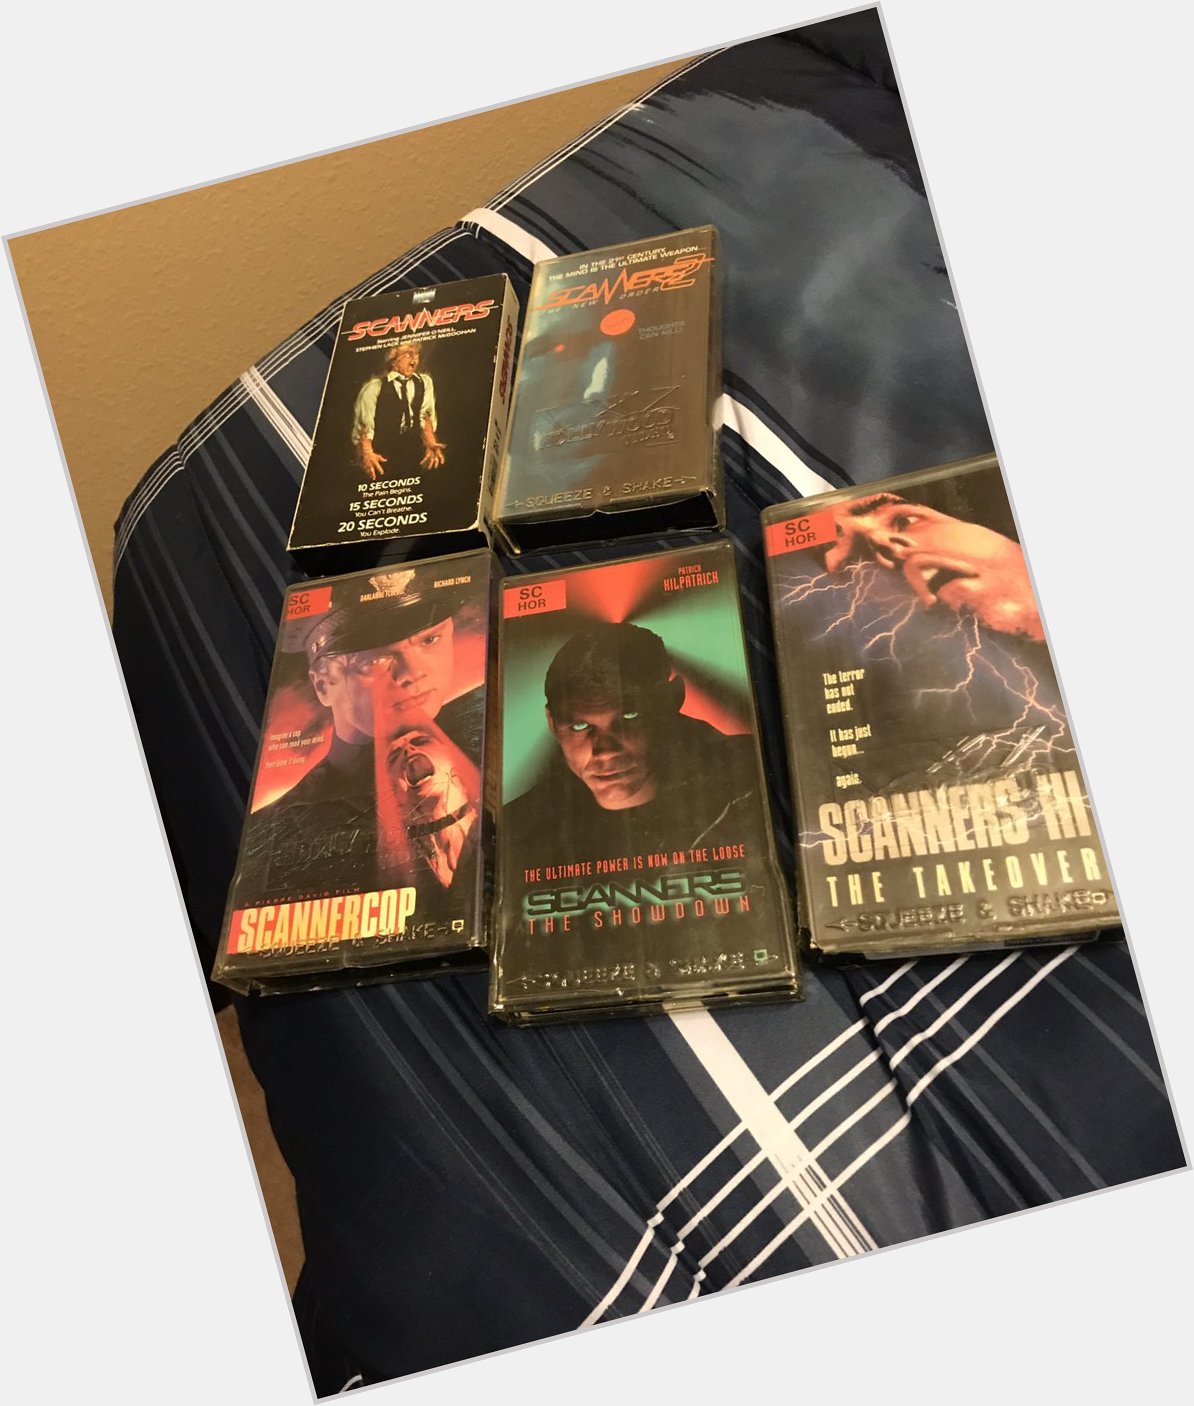  I m a Scanners fan, I own them all on VHS , Happy Birthday David Cronenberg   